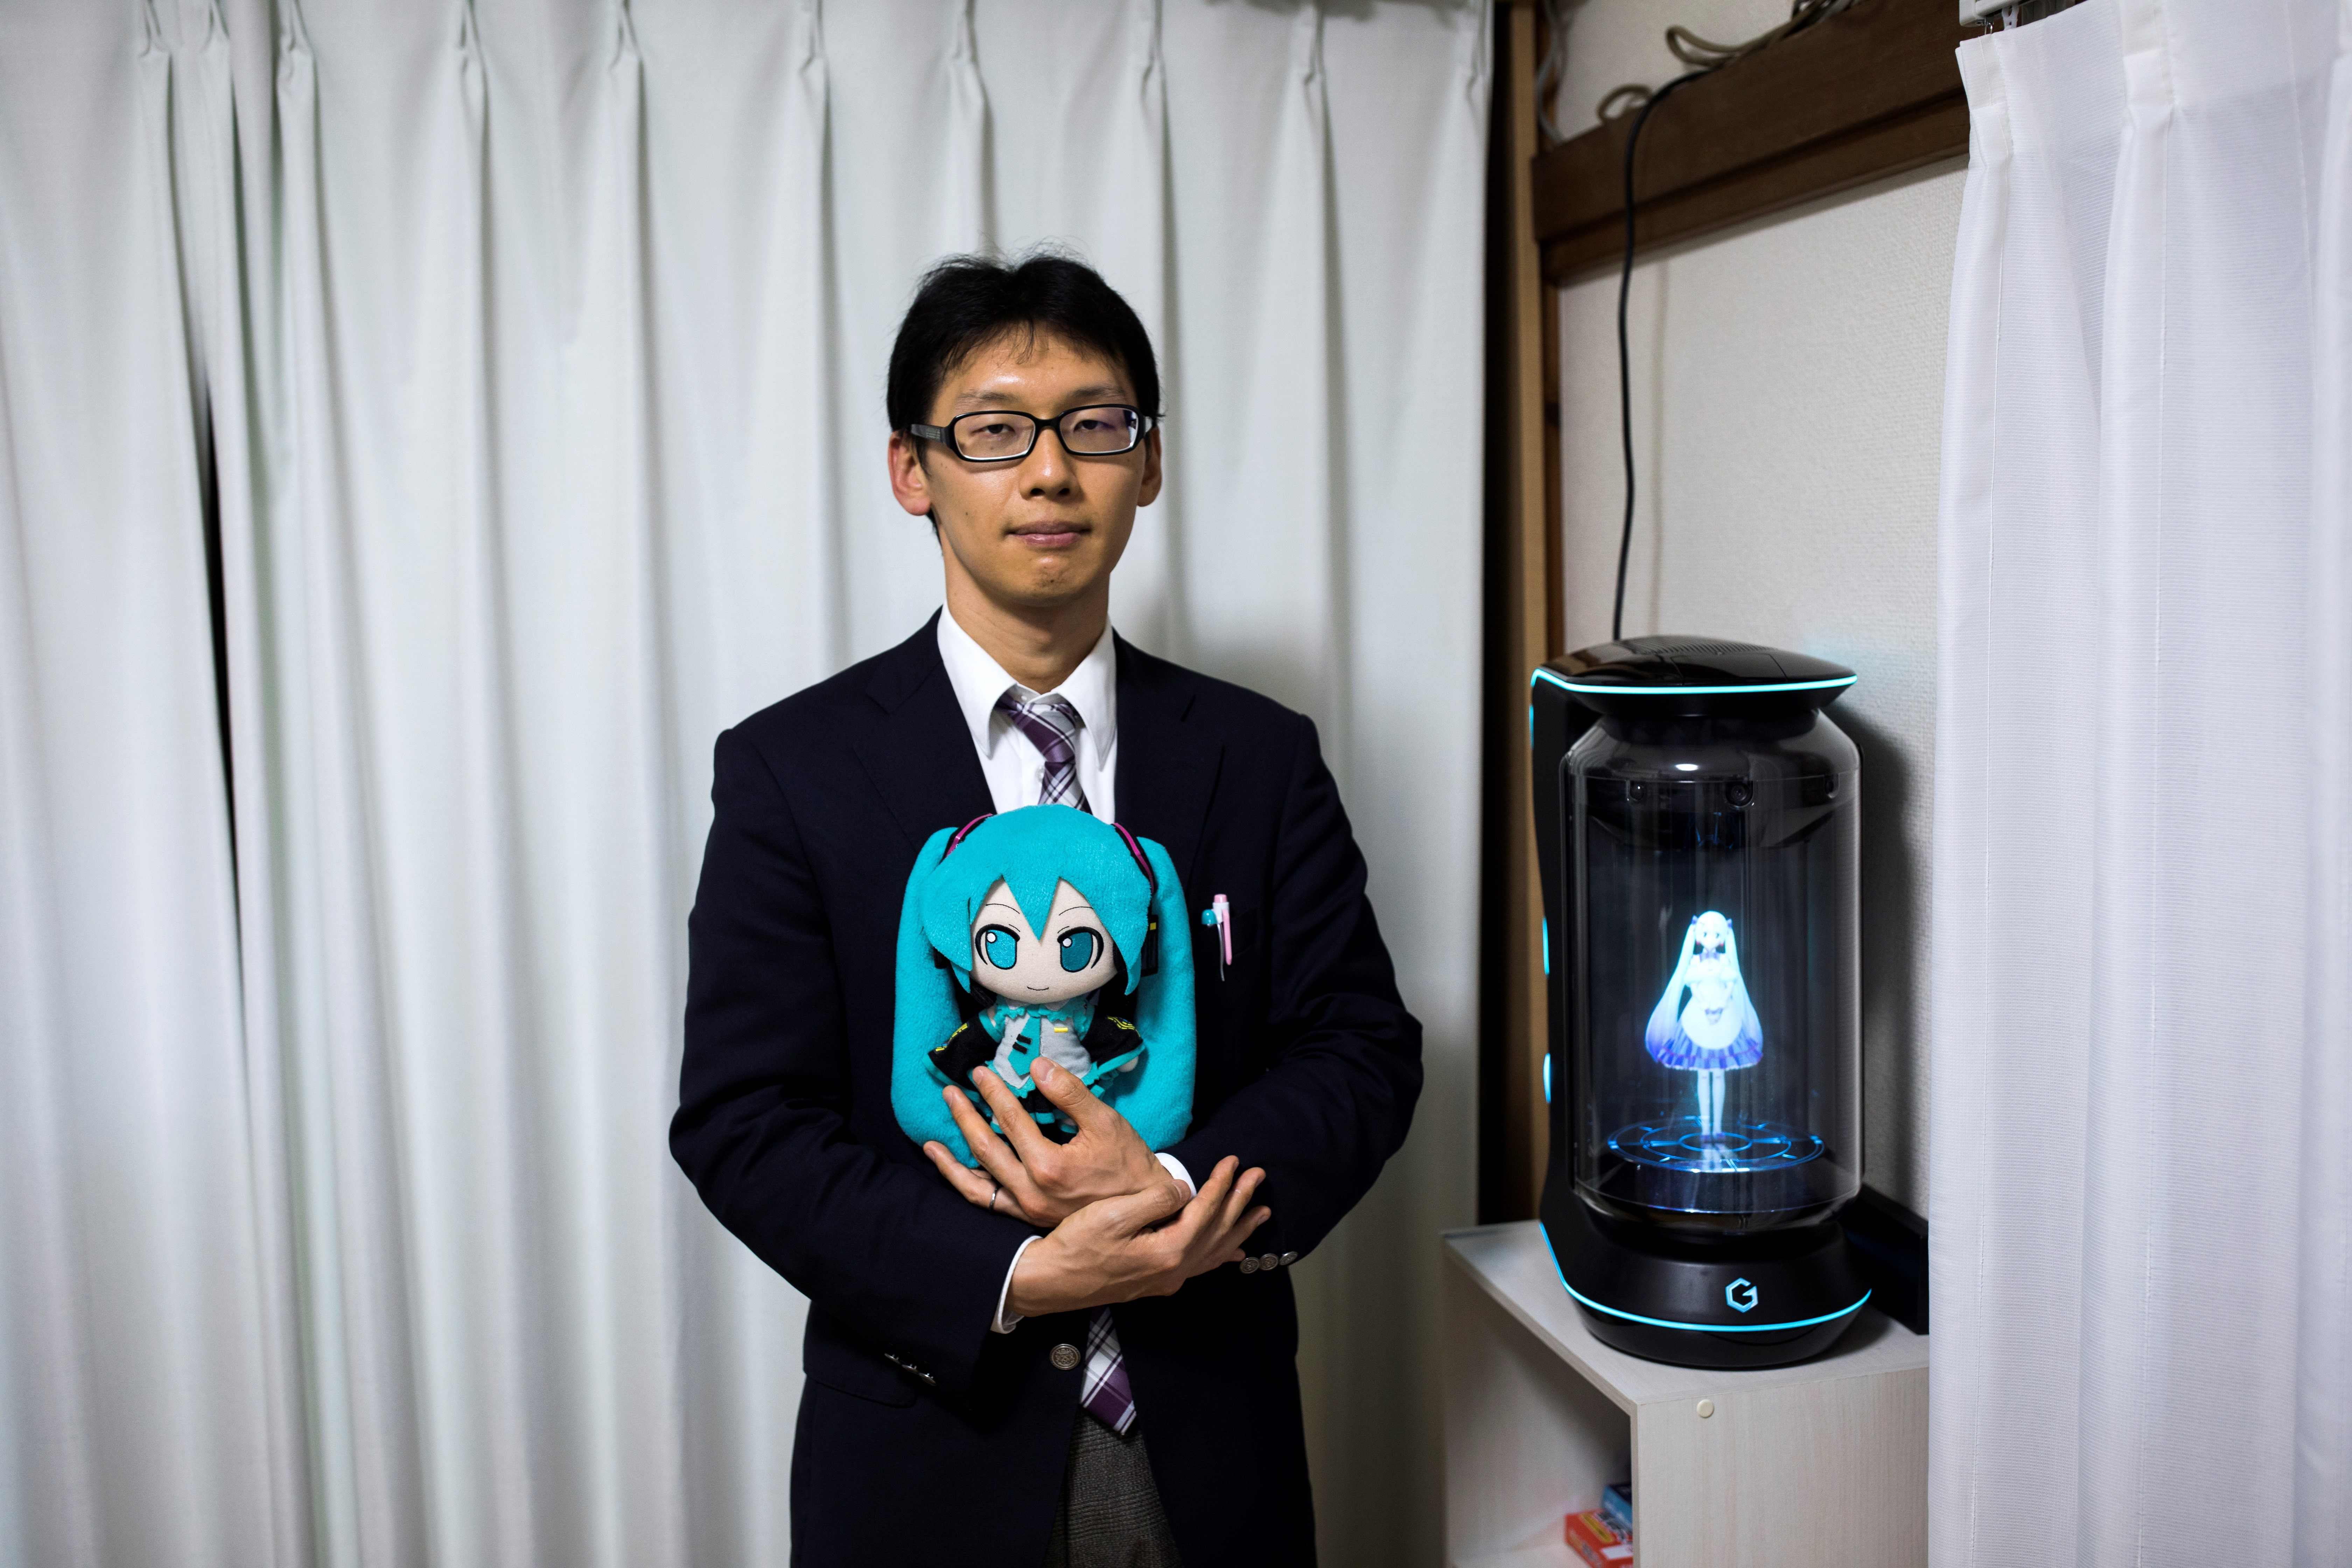 Japanese man marries hologram of